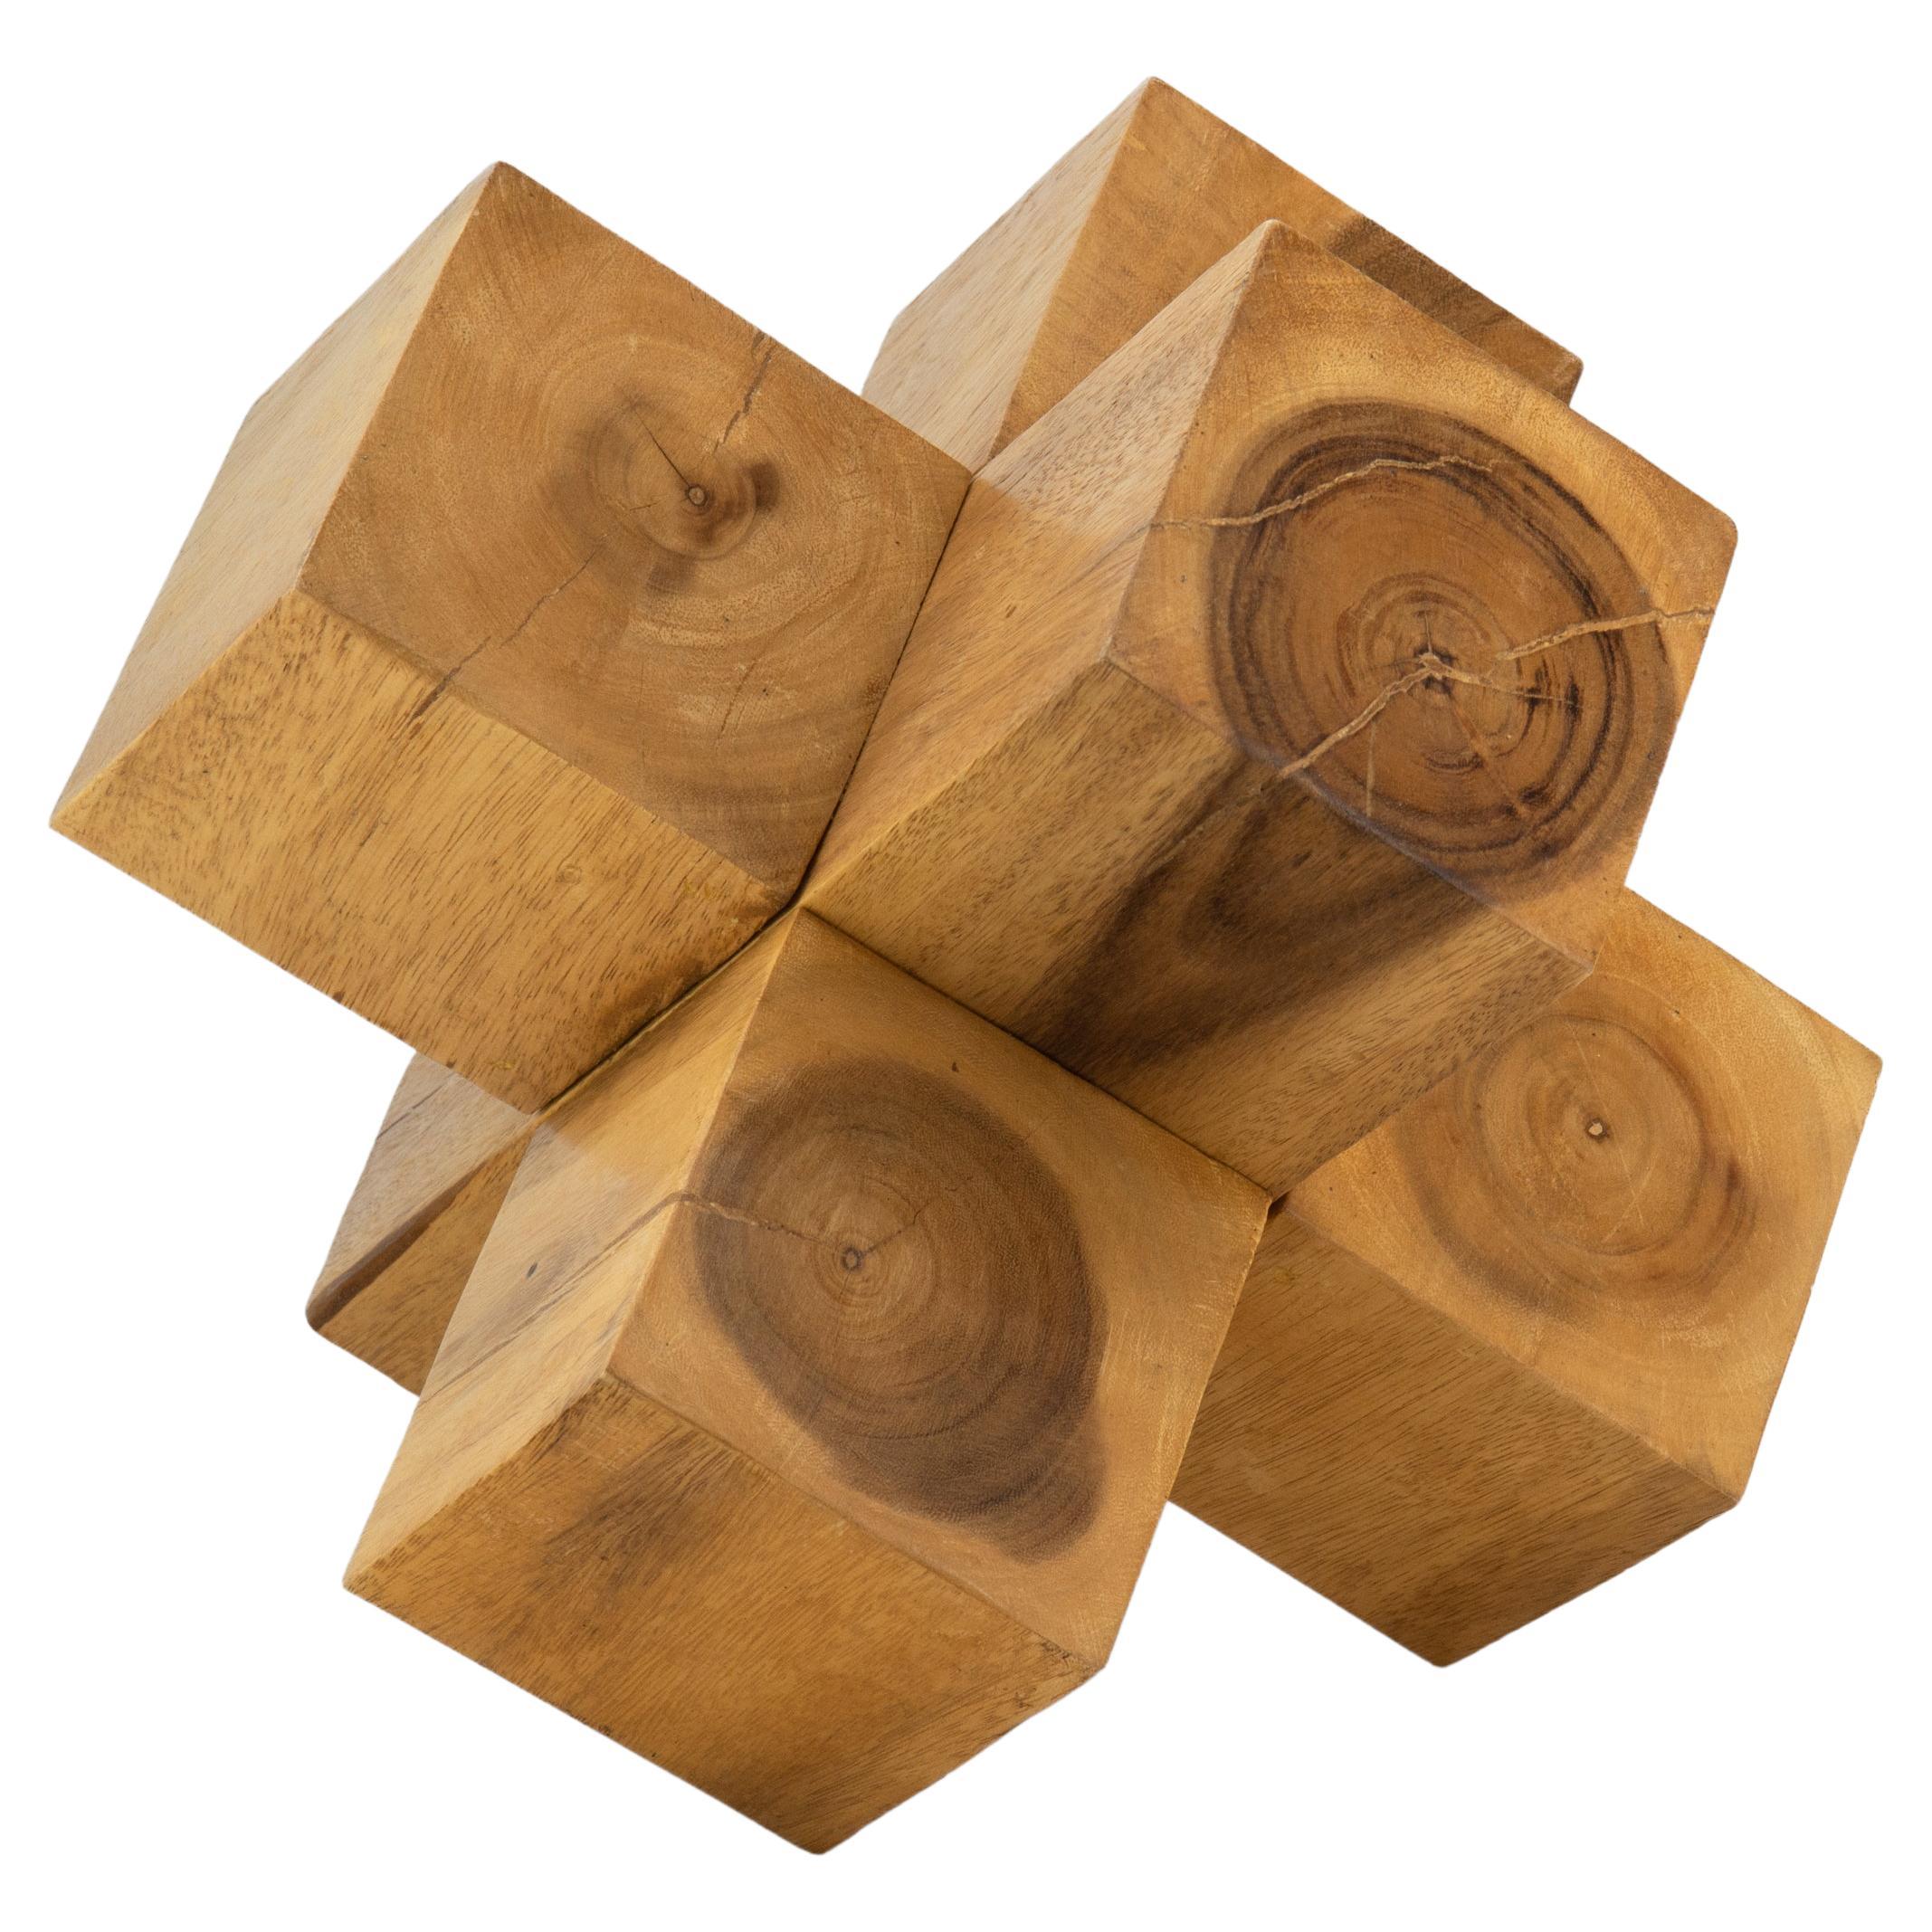 Vintage Wood Geometric Sculpture Stamped A Geddis 77 For Sale